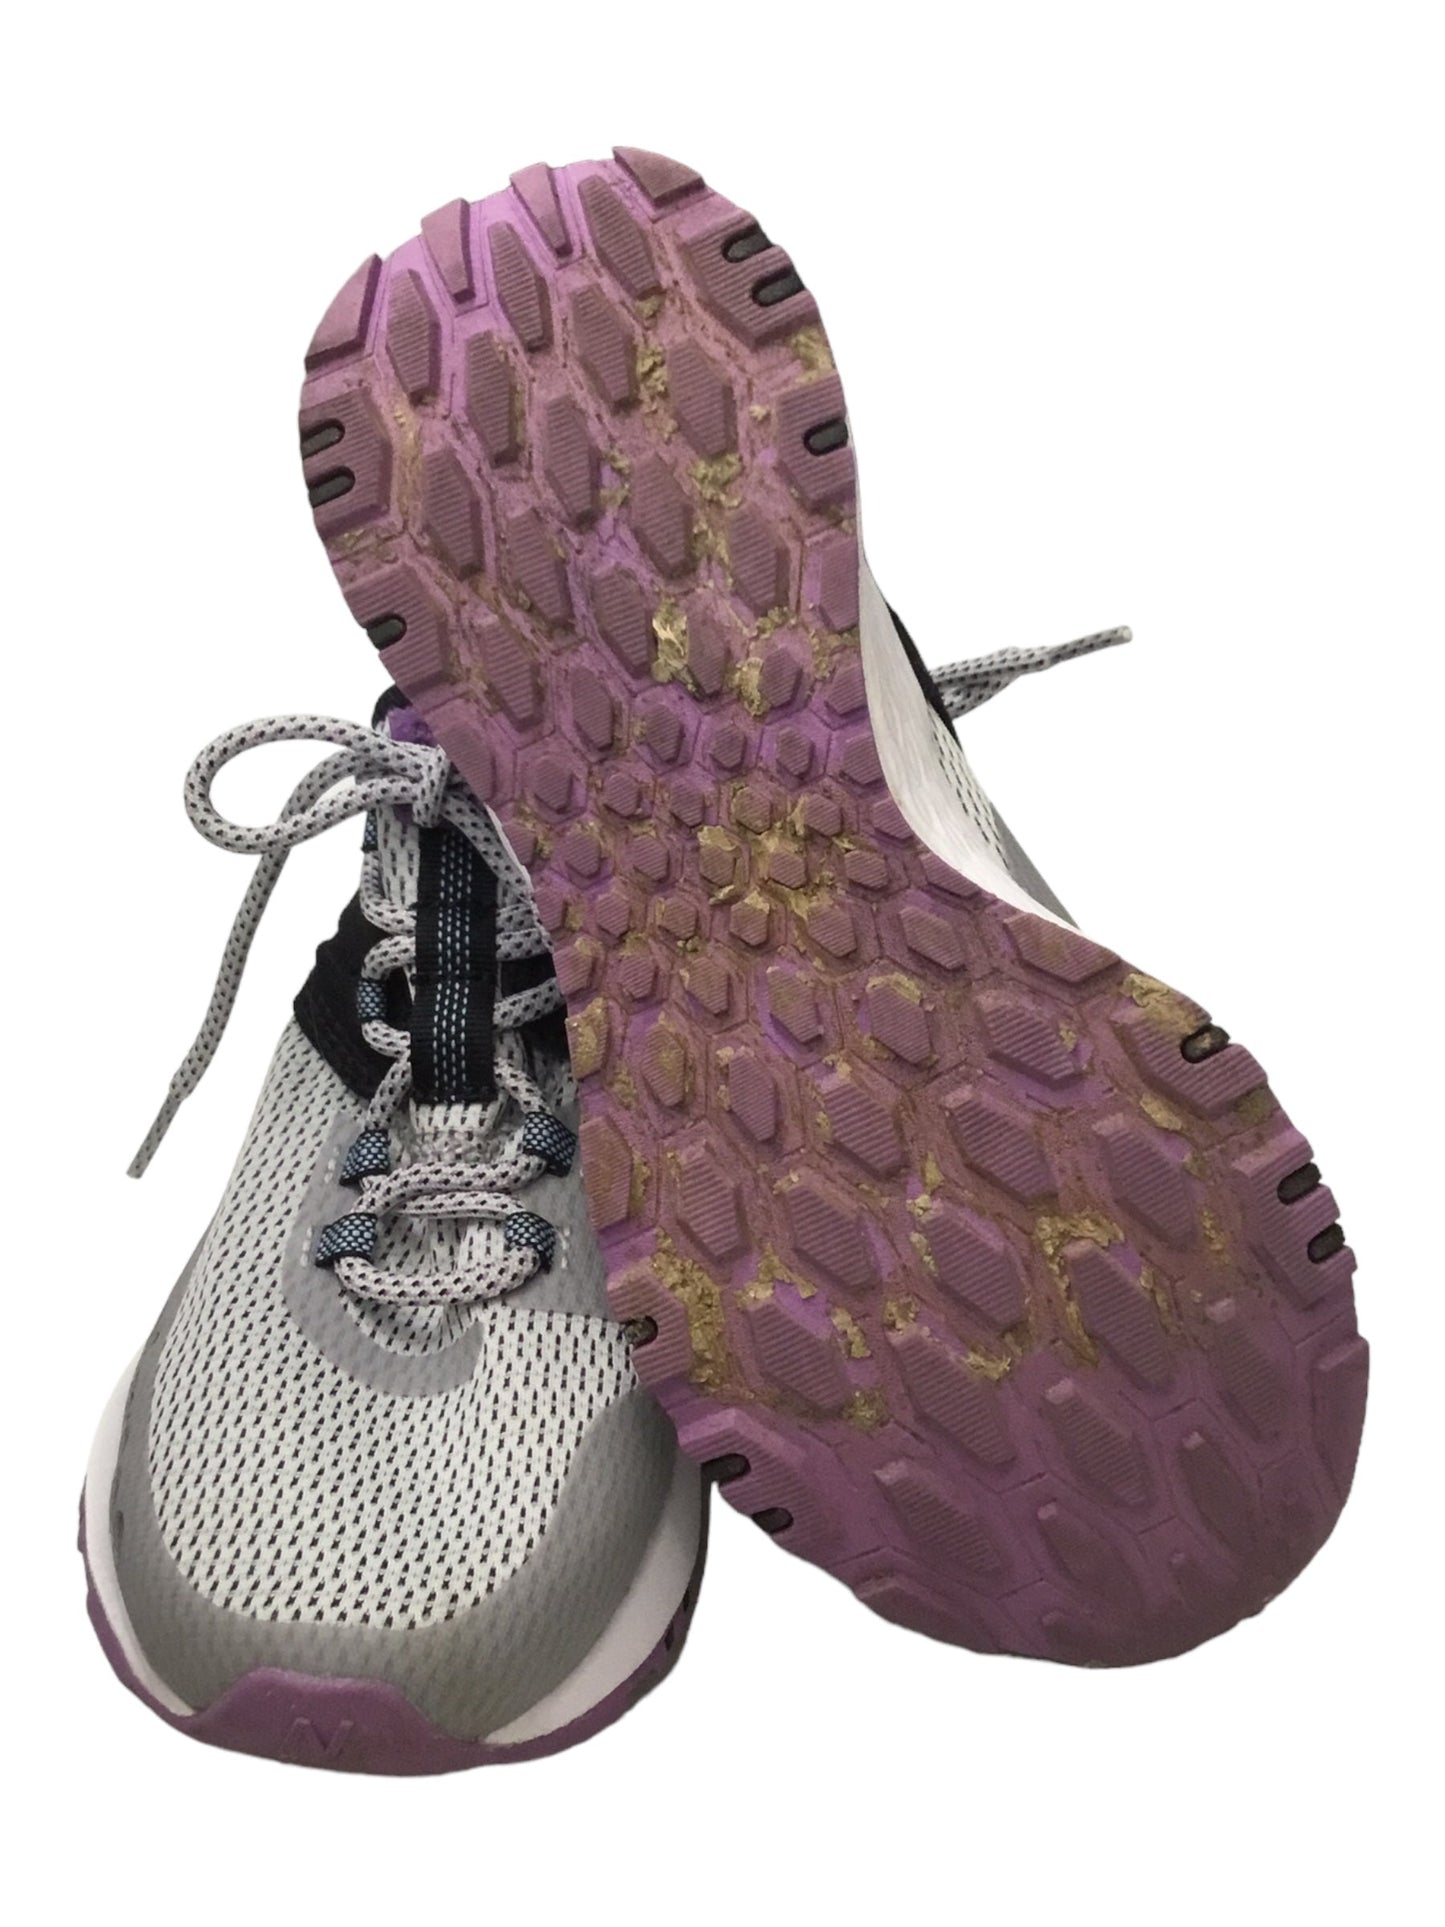 Grey & Purple Shoes Athletic New Balance, Size 8